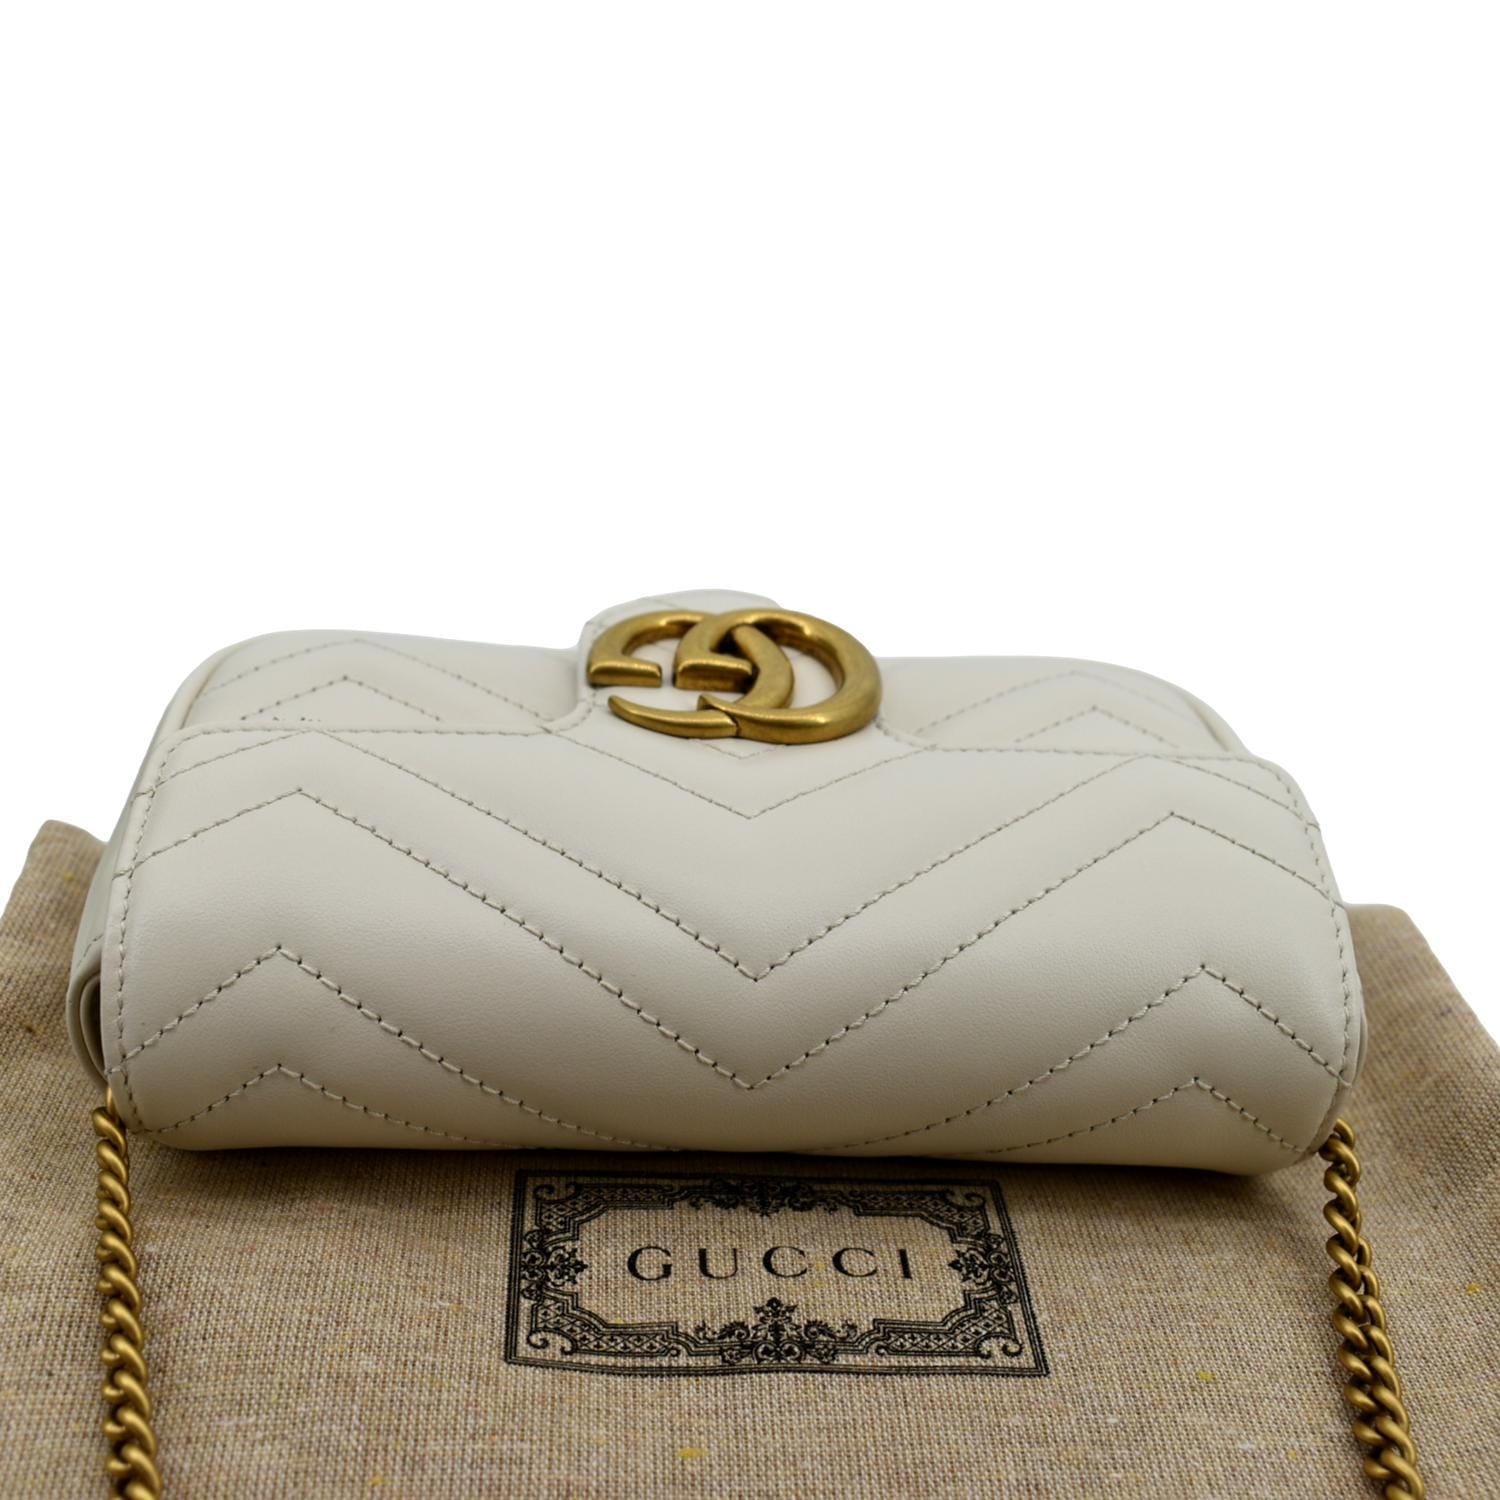 White GG Marmont super mini leather cross-body bag